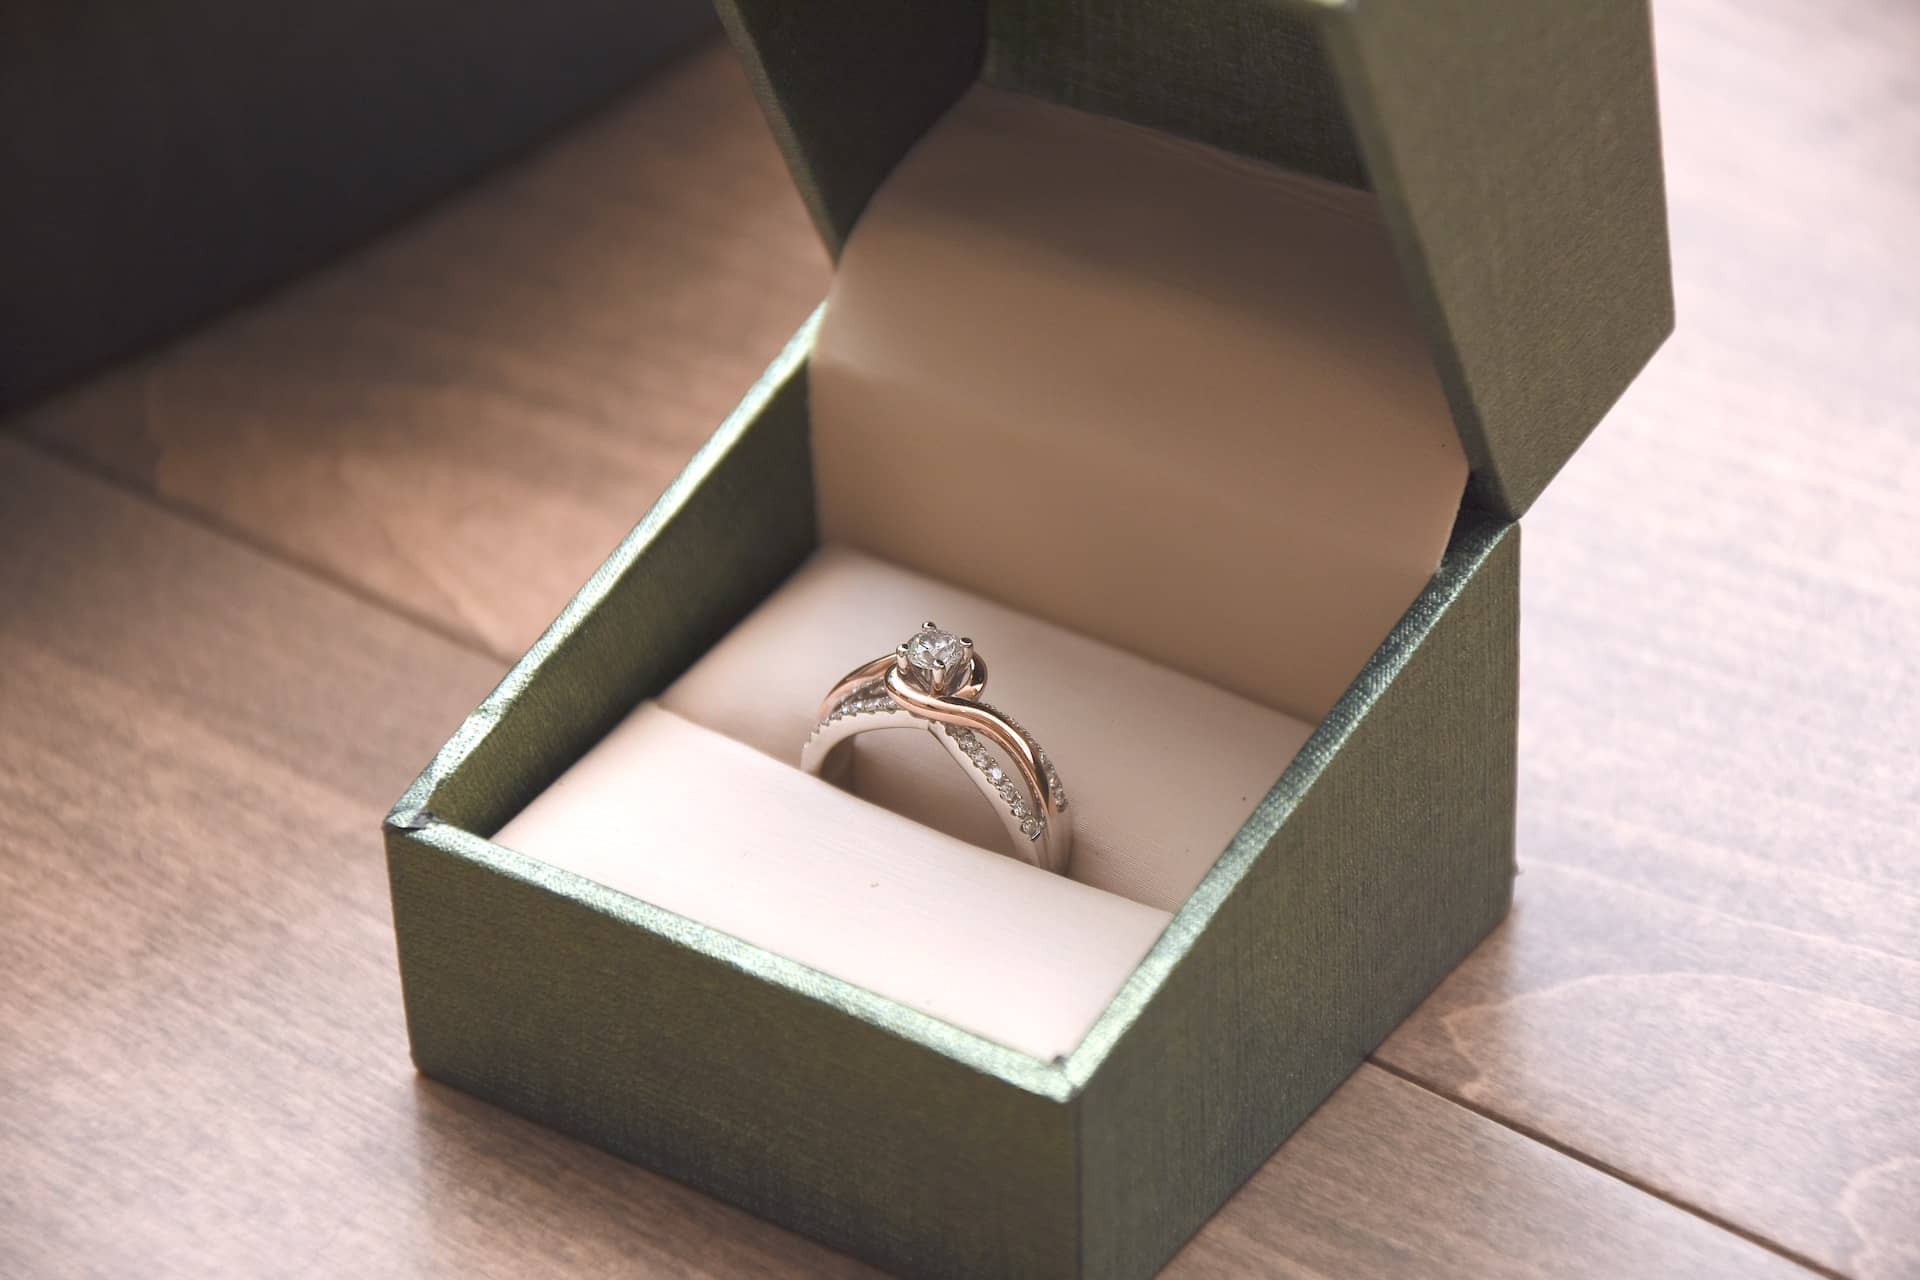 Silver diamond ring in box